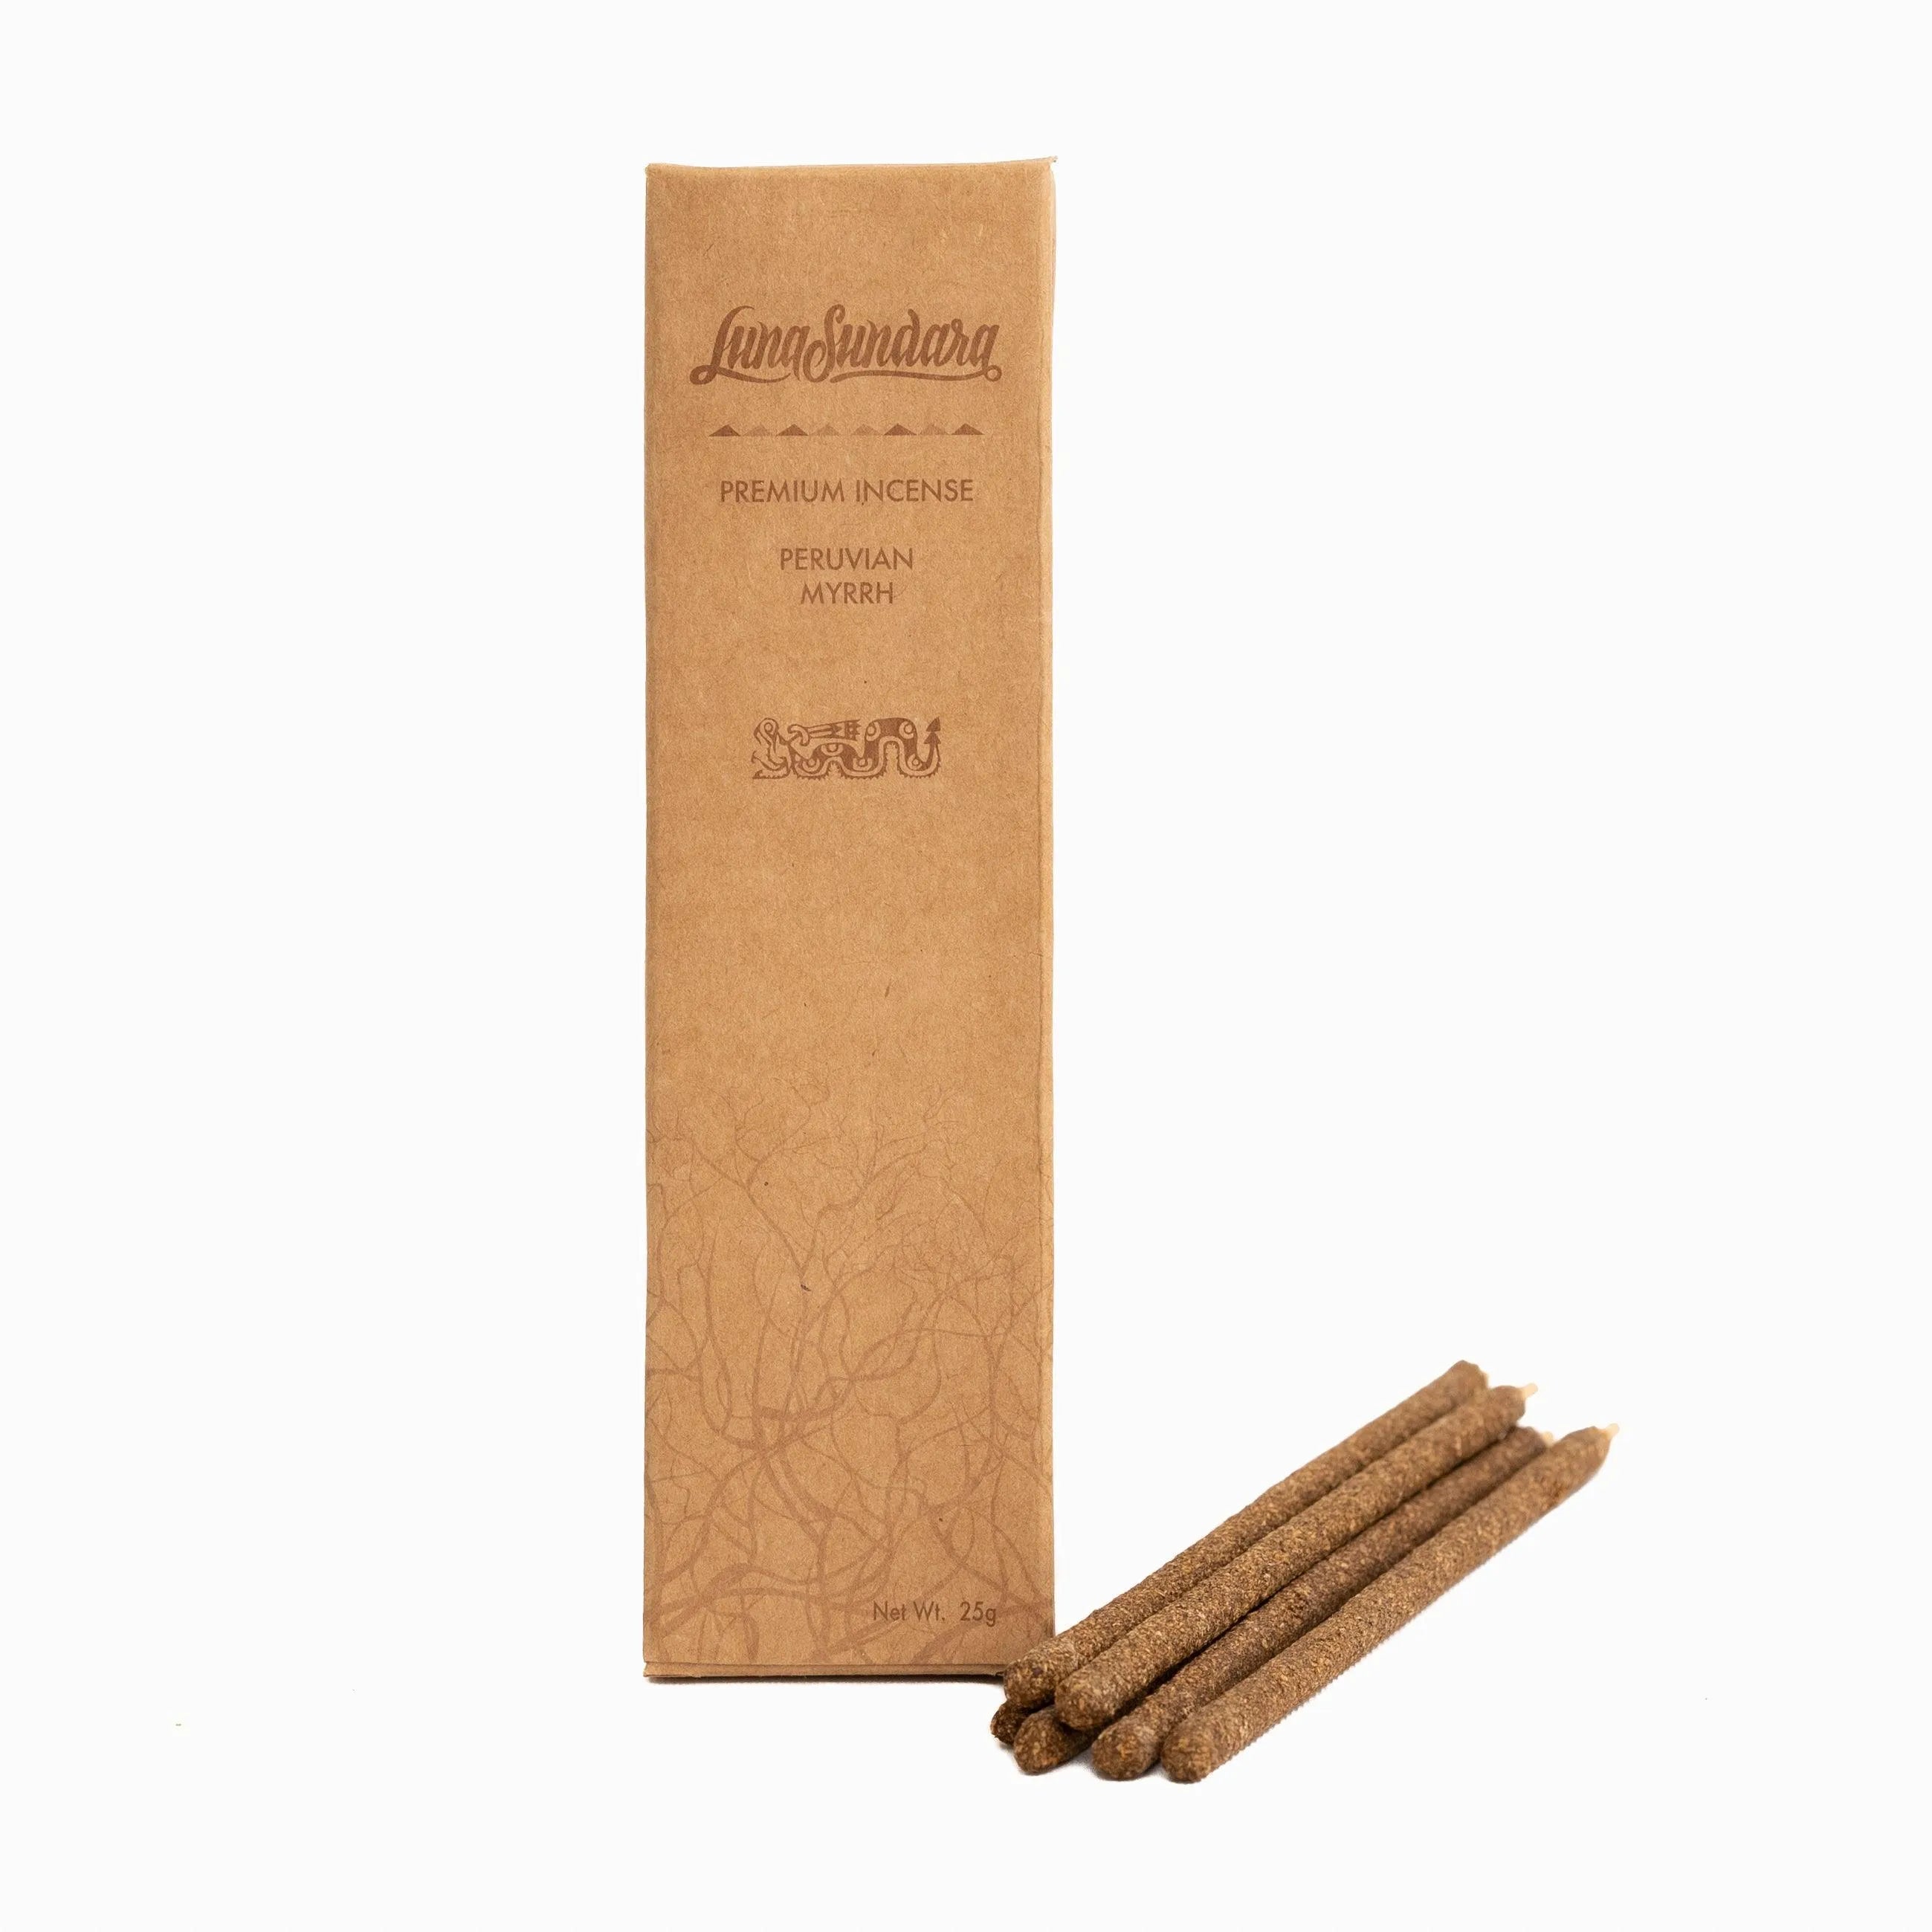 myrrh-hand-rolled-incense-sticks-from-100percent-wild-peruvian-myrrh-luna-sundara-1 - Luna Sundara